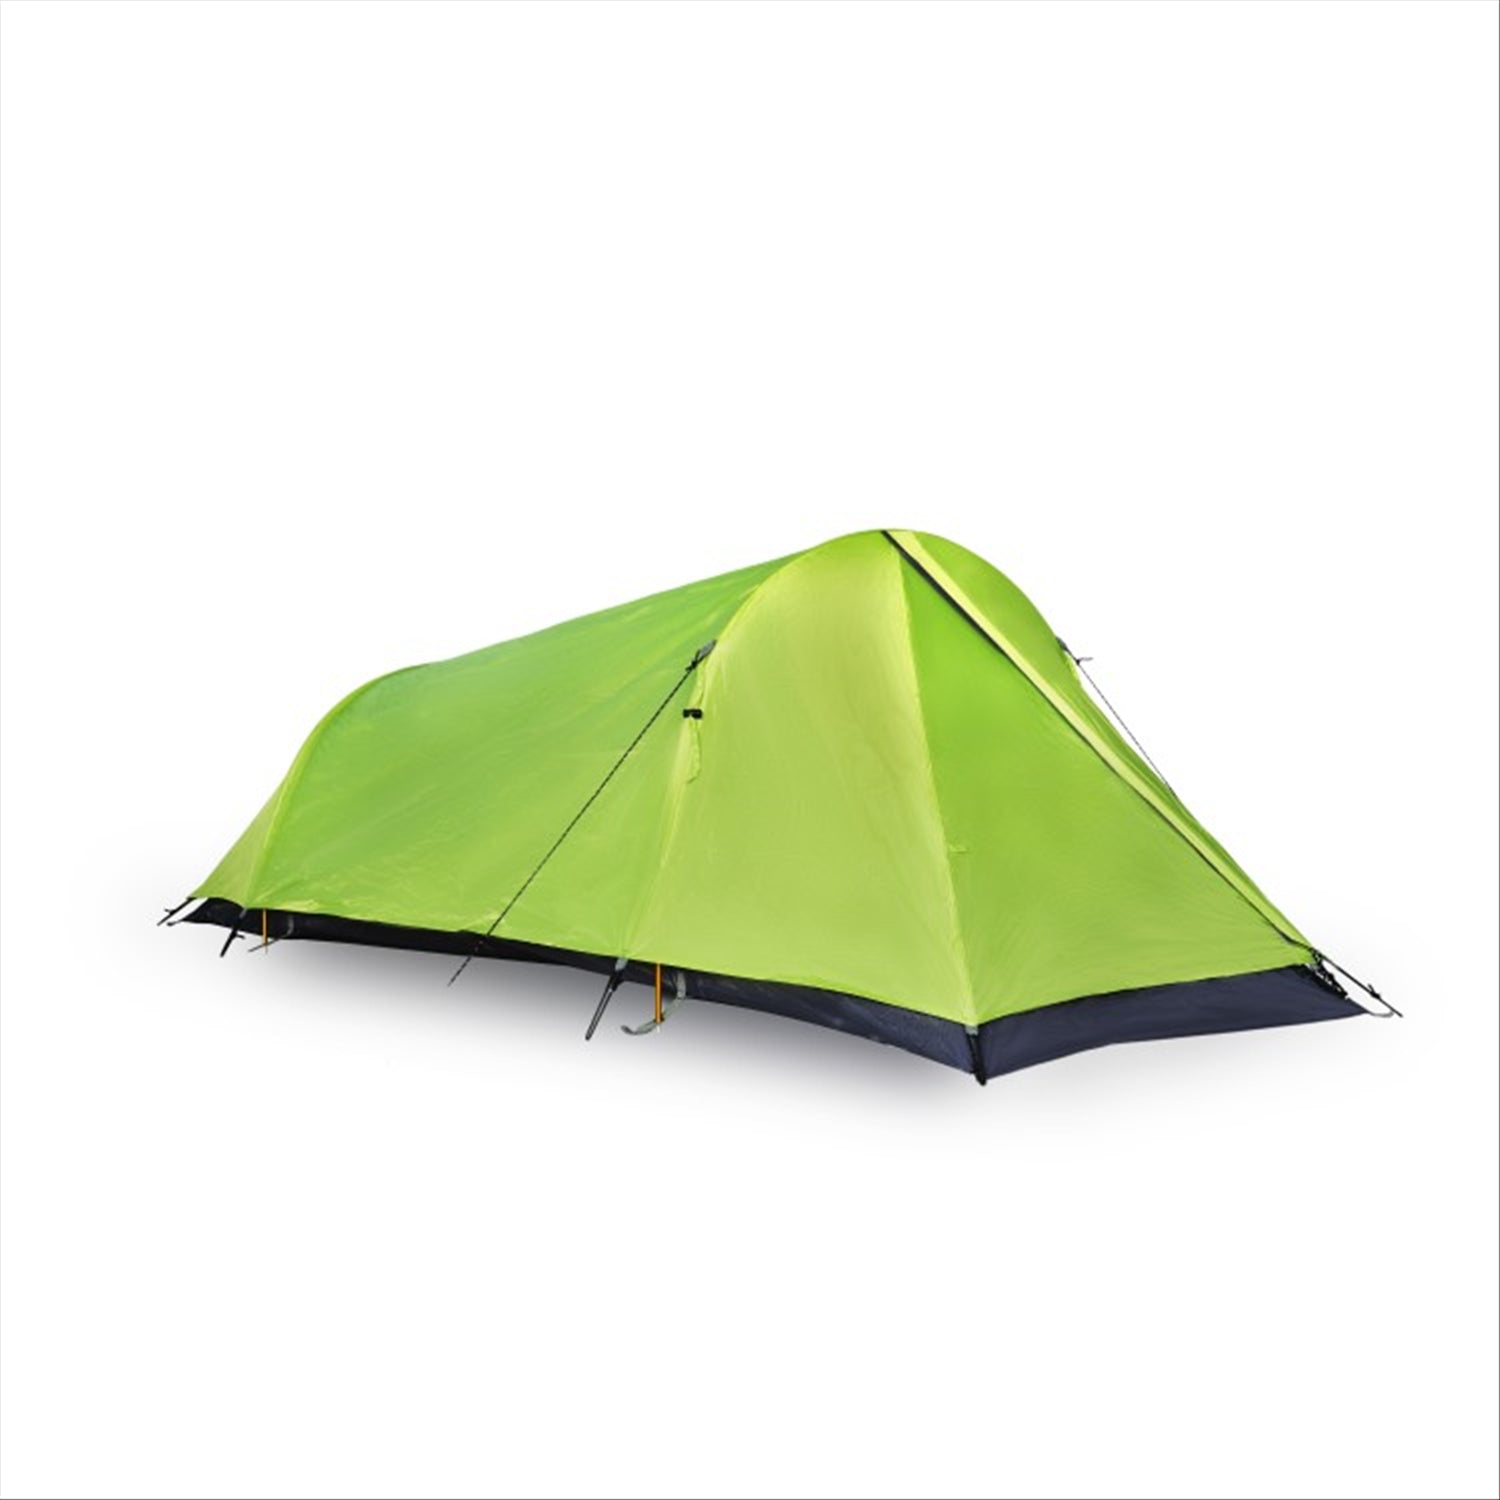 Ranger 1 - Lightweight 1 Person Backpacking Tent, 1.35kg